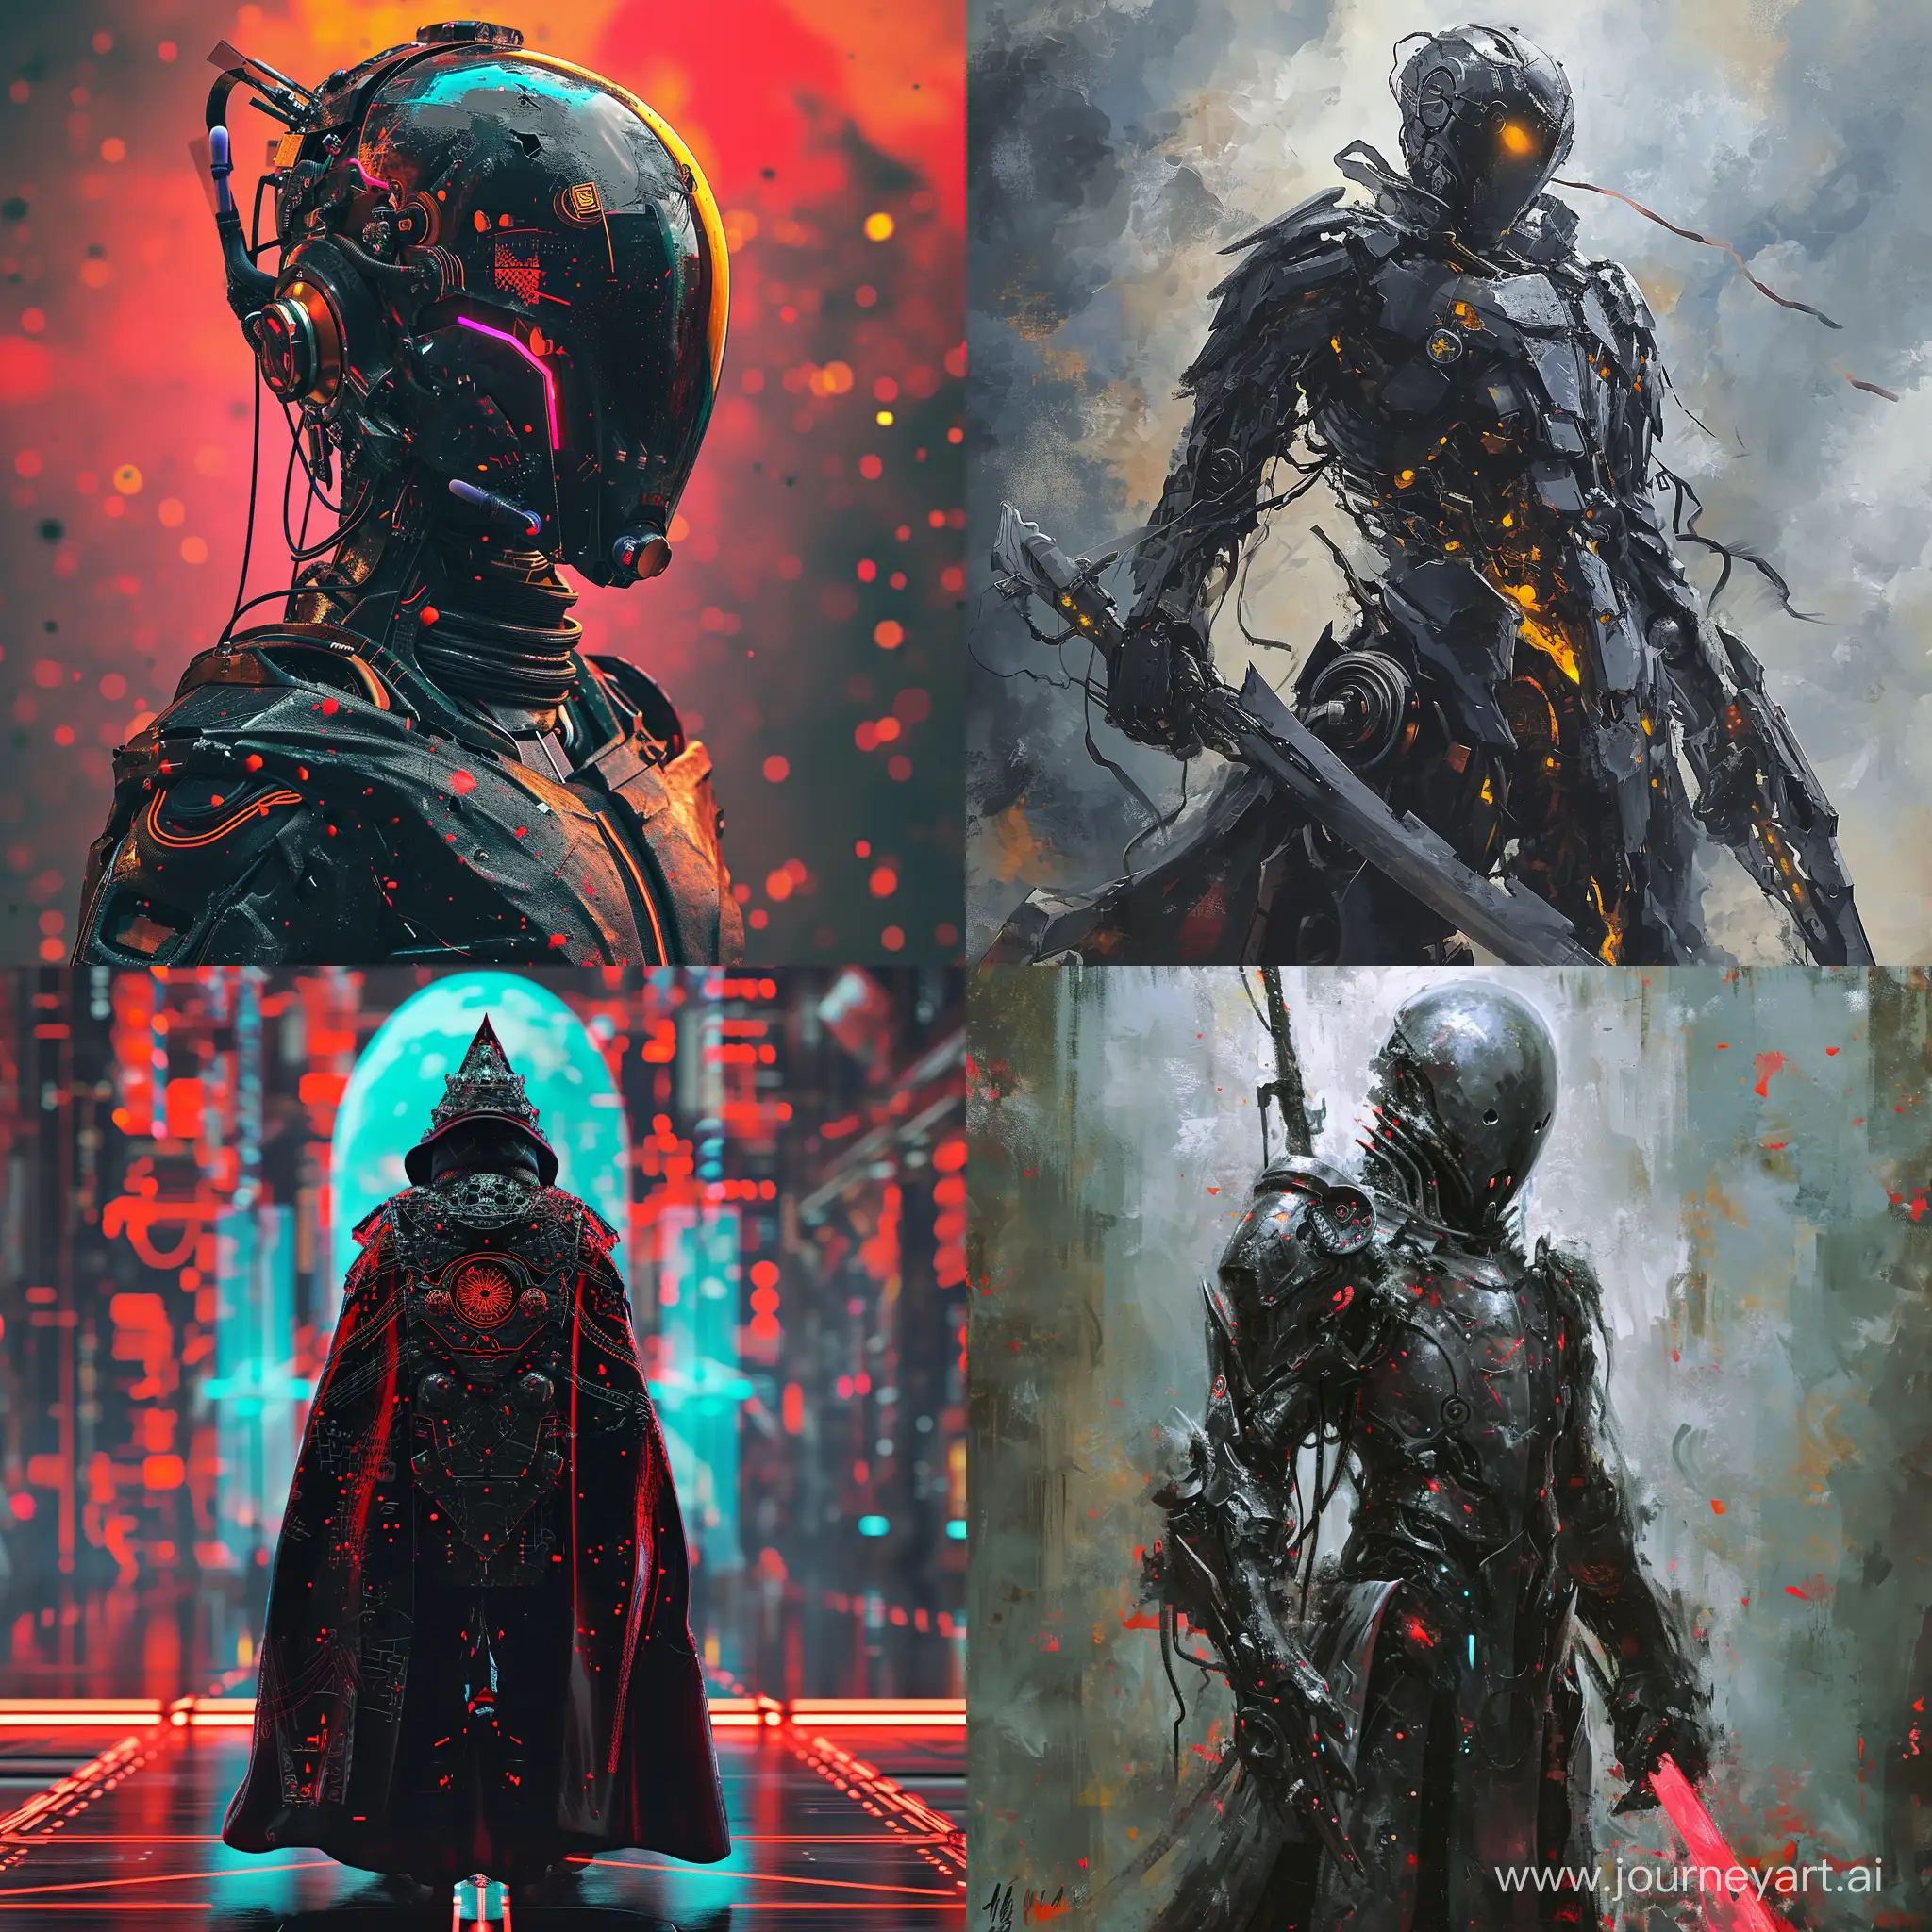 Cybernetic-Black-Knight-in-Vibrant-Cyberpunk-Fantasy-Armor